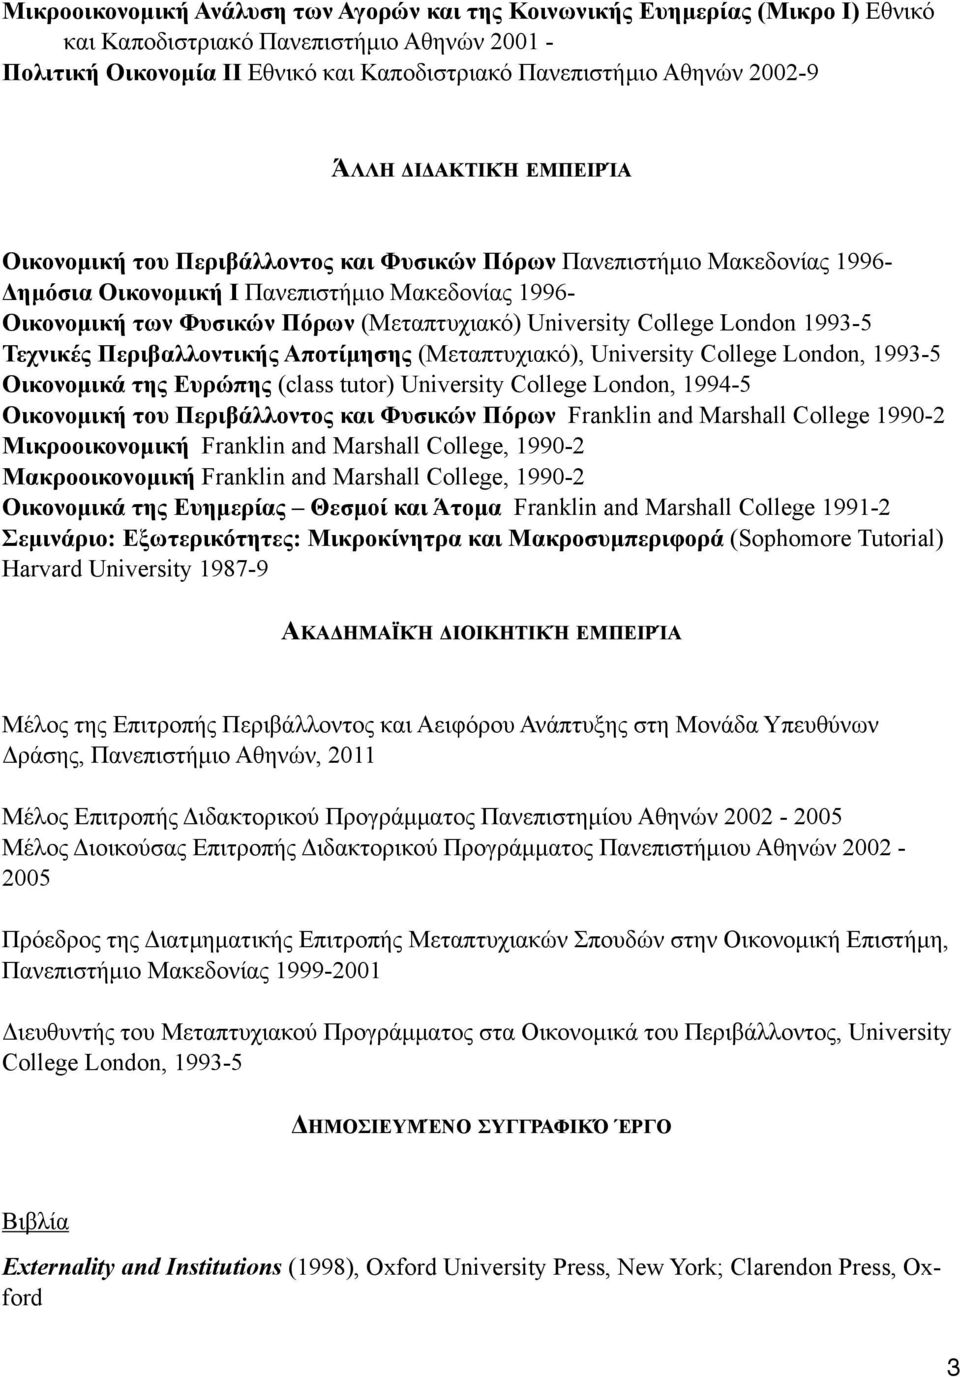 University College London 1993-5 Τεχνικές Περιβαλλοντικής Αποτίµησης (Μεταπτυχιακό), University College London, 1993-5 Οικονοµικά της Ευρώπης (class tutor) University College London, 1994-5